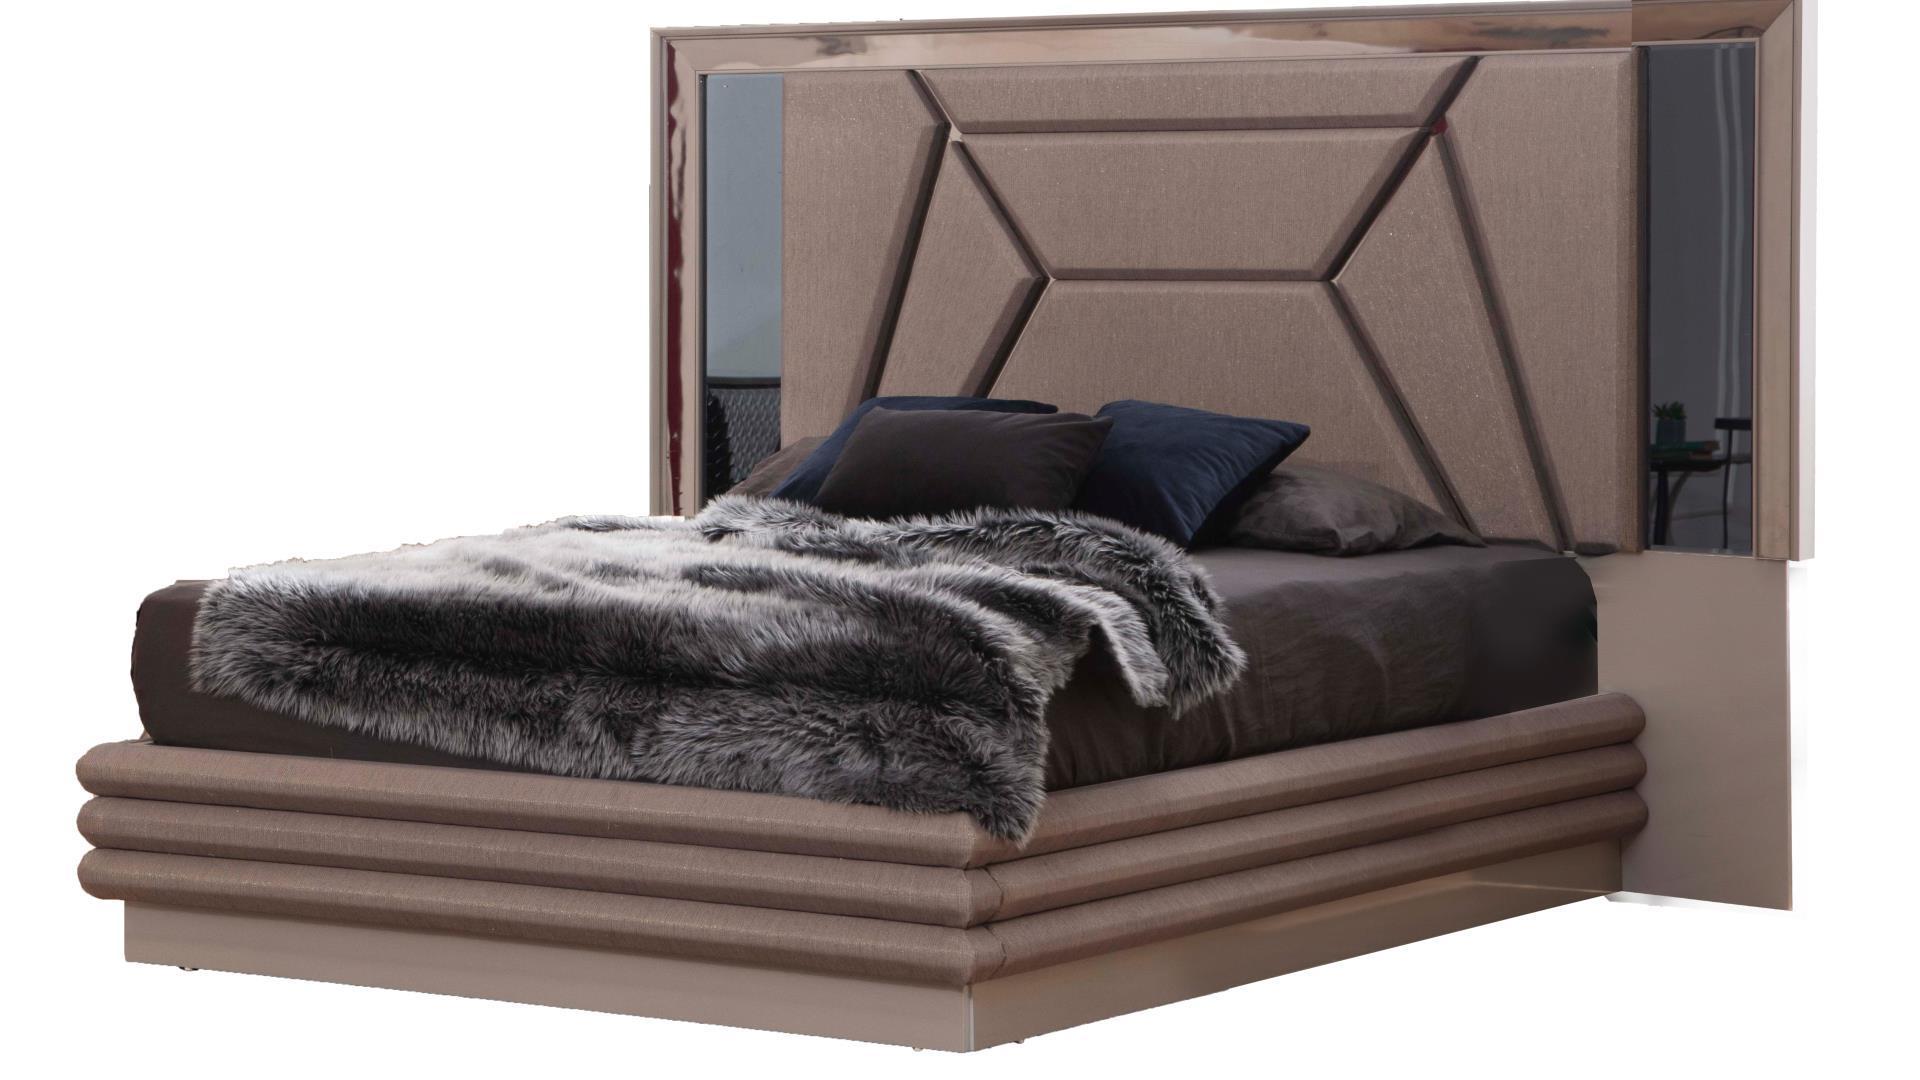 Contemporary, Modern Platform Bed WENDY WENDY-EK in Taupe Fabric